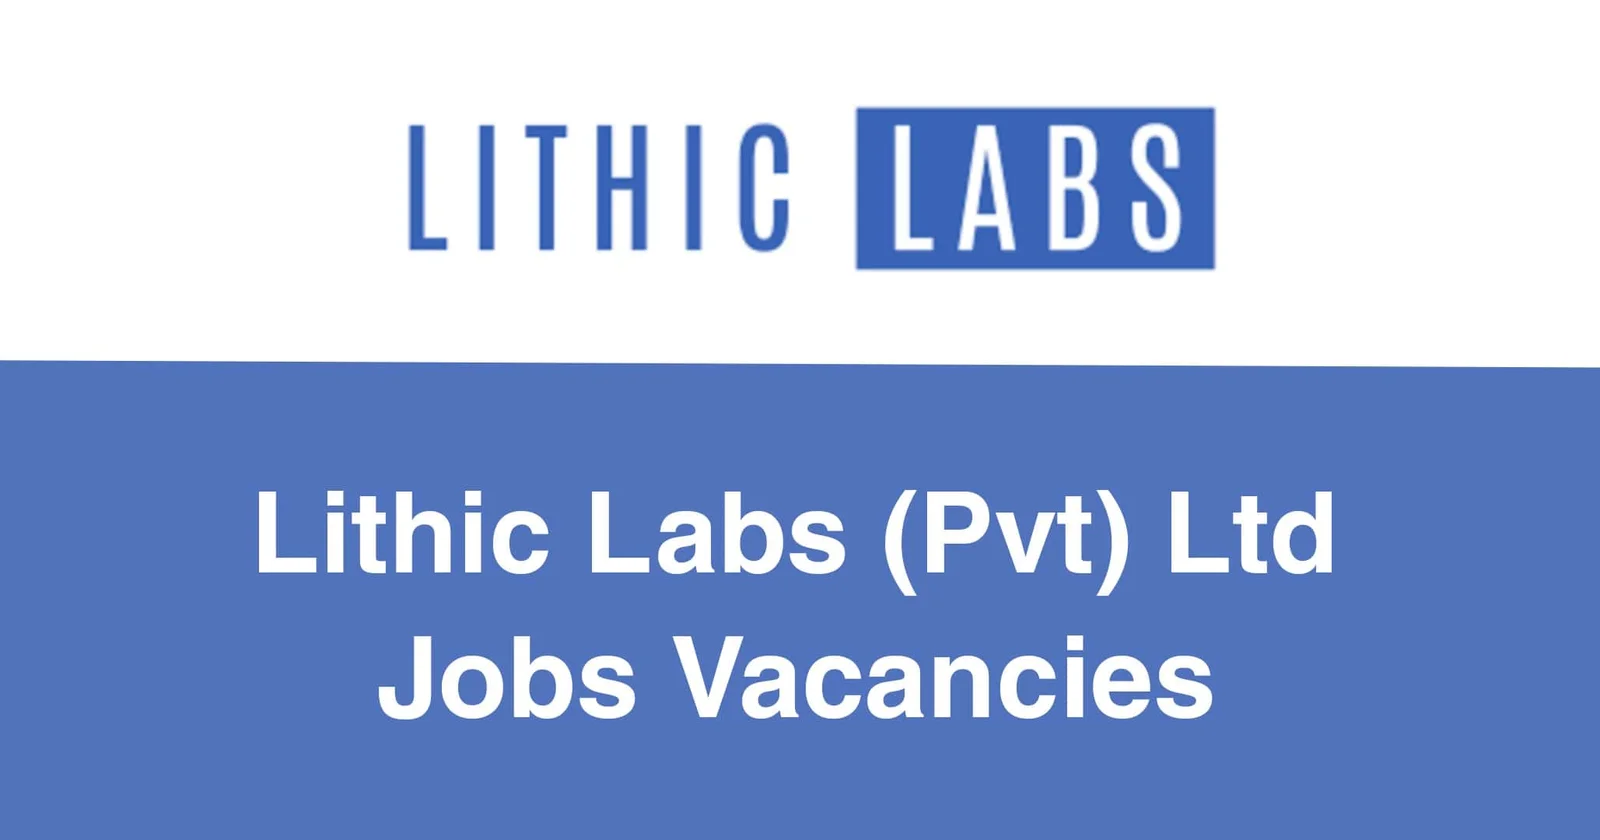 Lithic Labs (Pvt) Ltd Jobs Vacancies